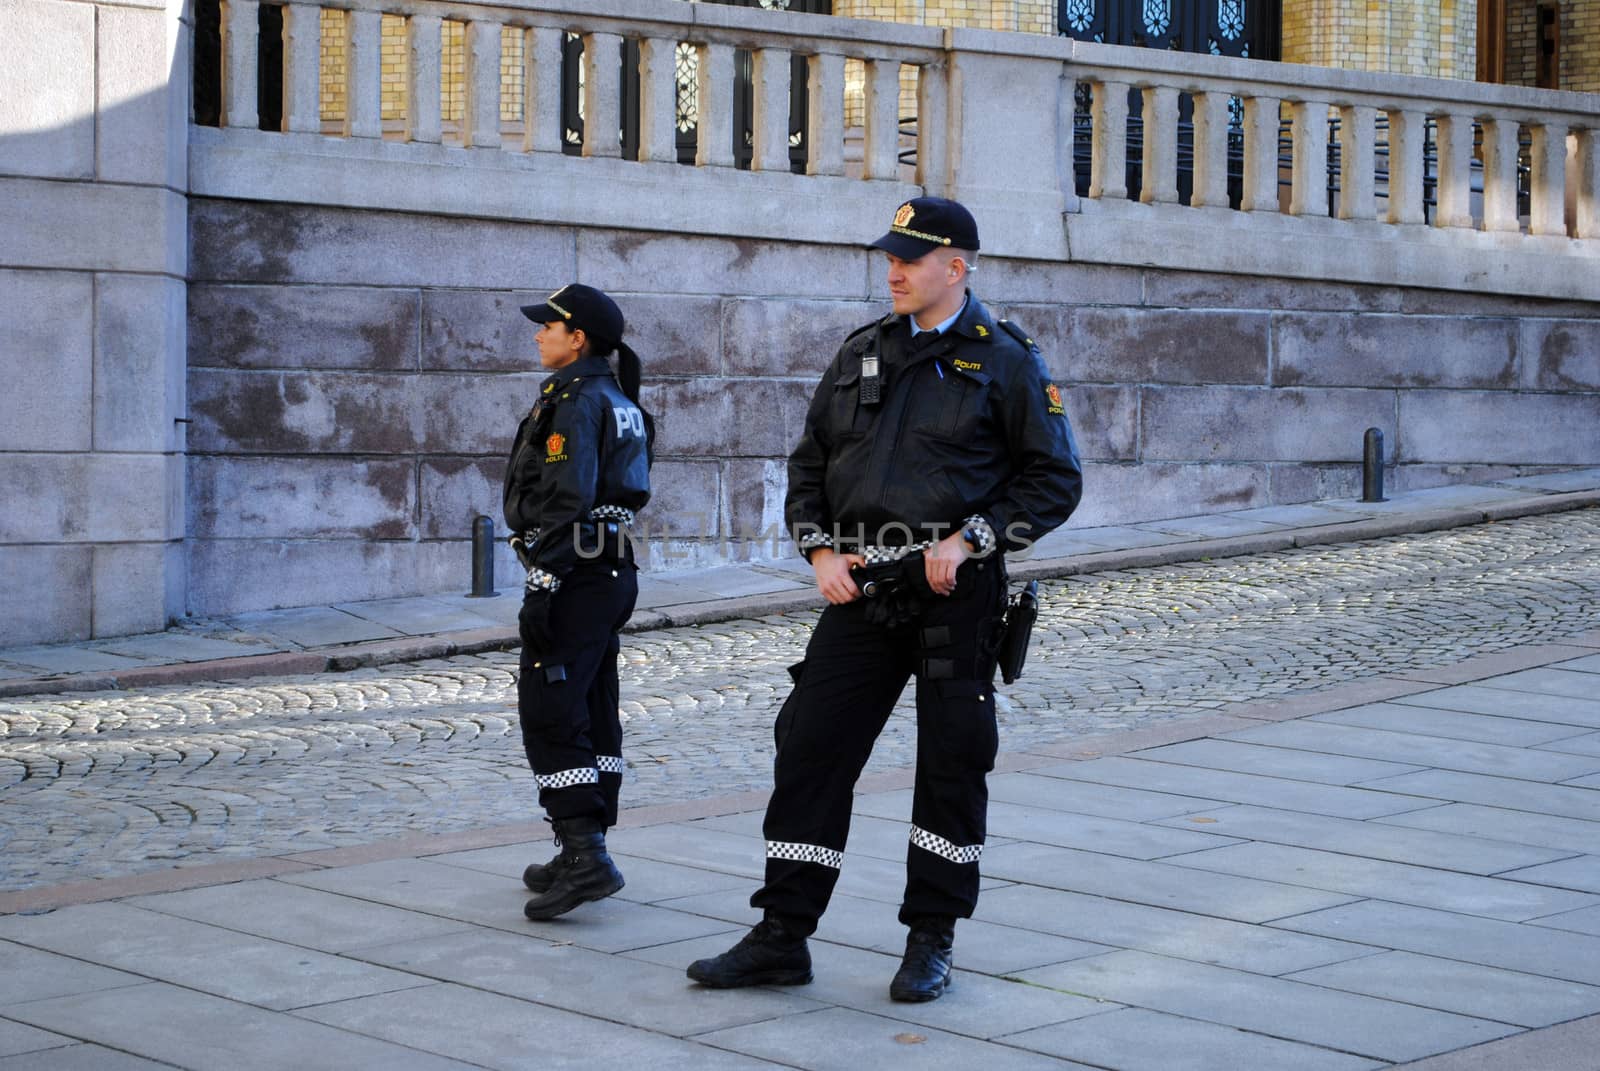 Norwegian police officers in front of the Norwegian parliament (Stortinget).